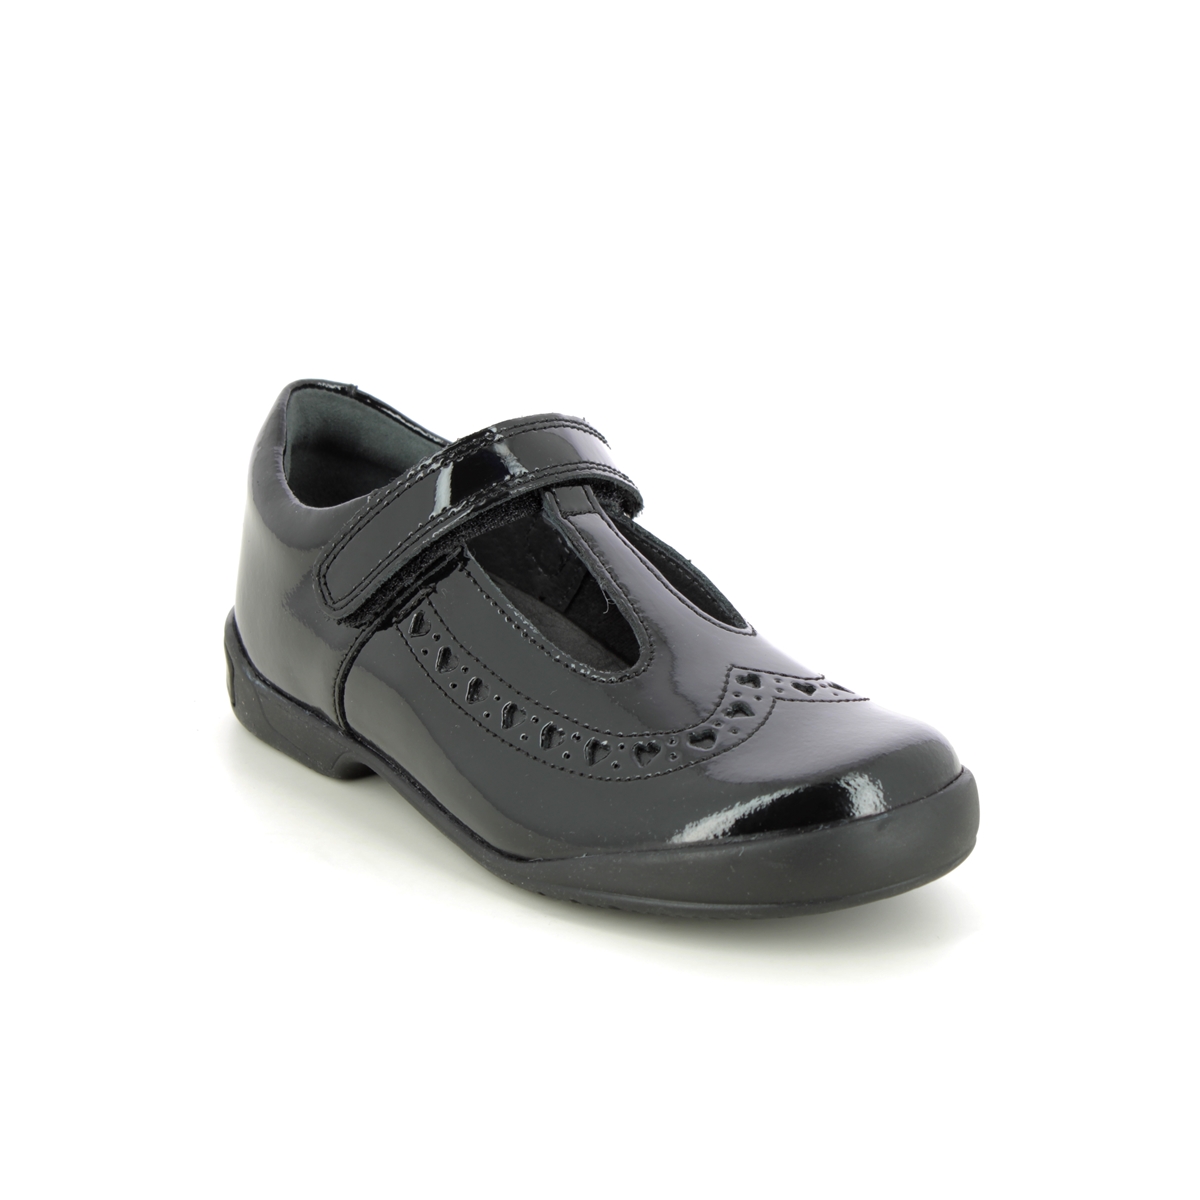 Start Rite - Leapfrog In Black Patent 2789-35E In Size 1.5 In Plain Black Patent For School Girls Shoes  In Black Patent For kids